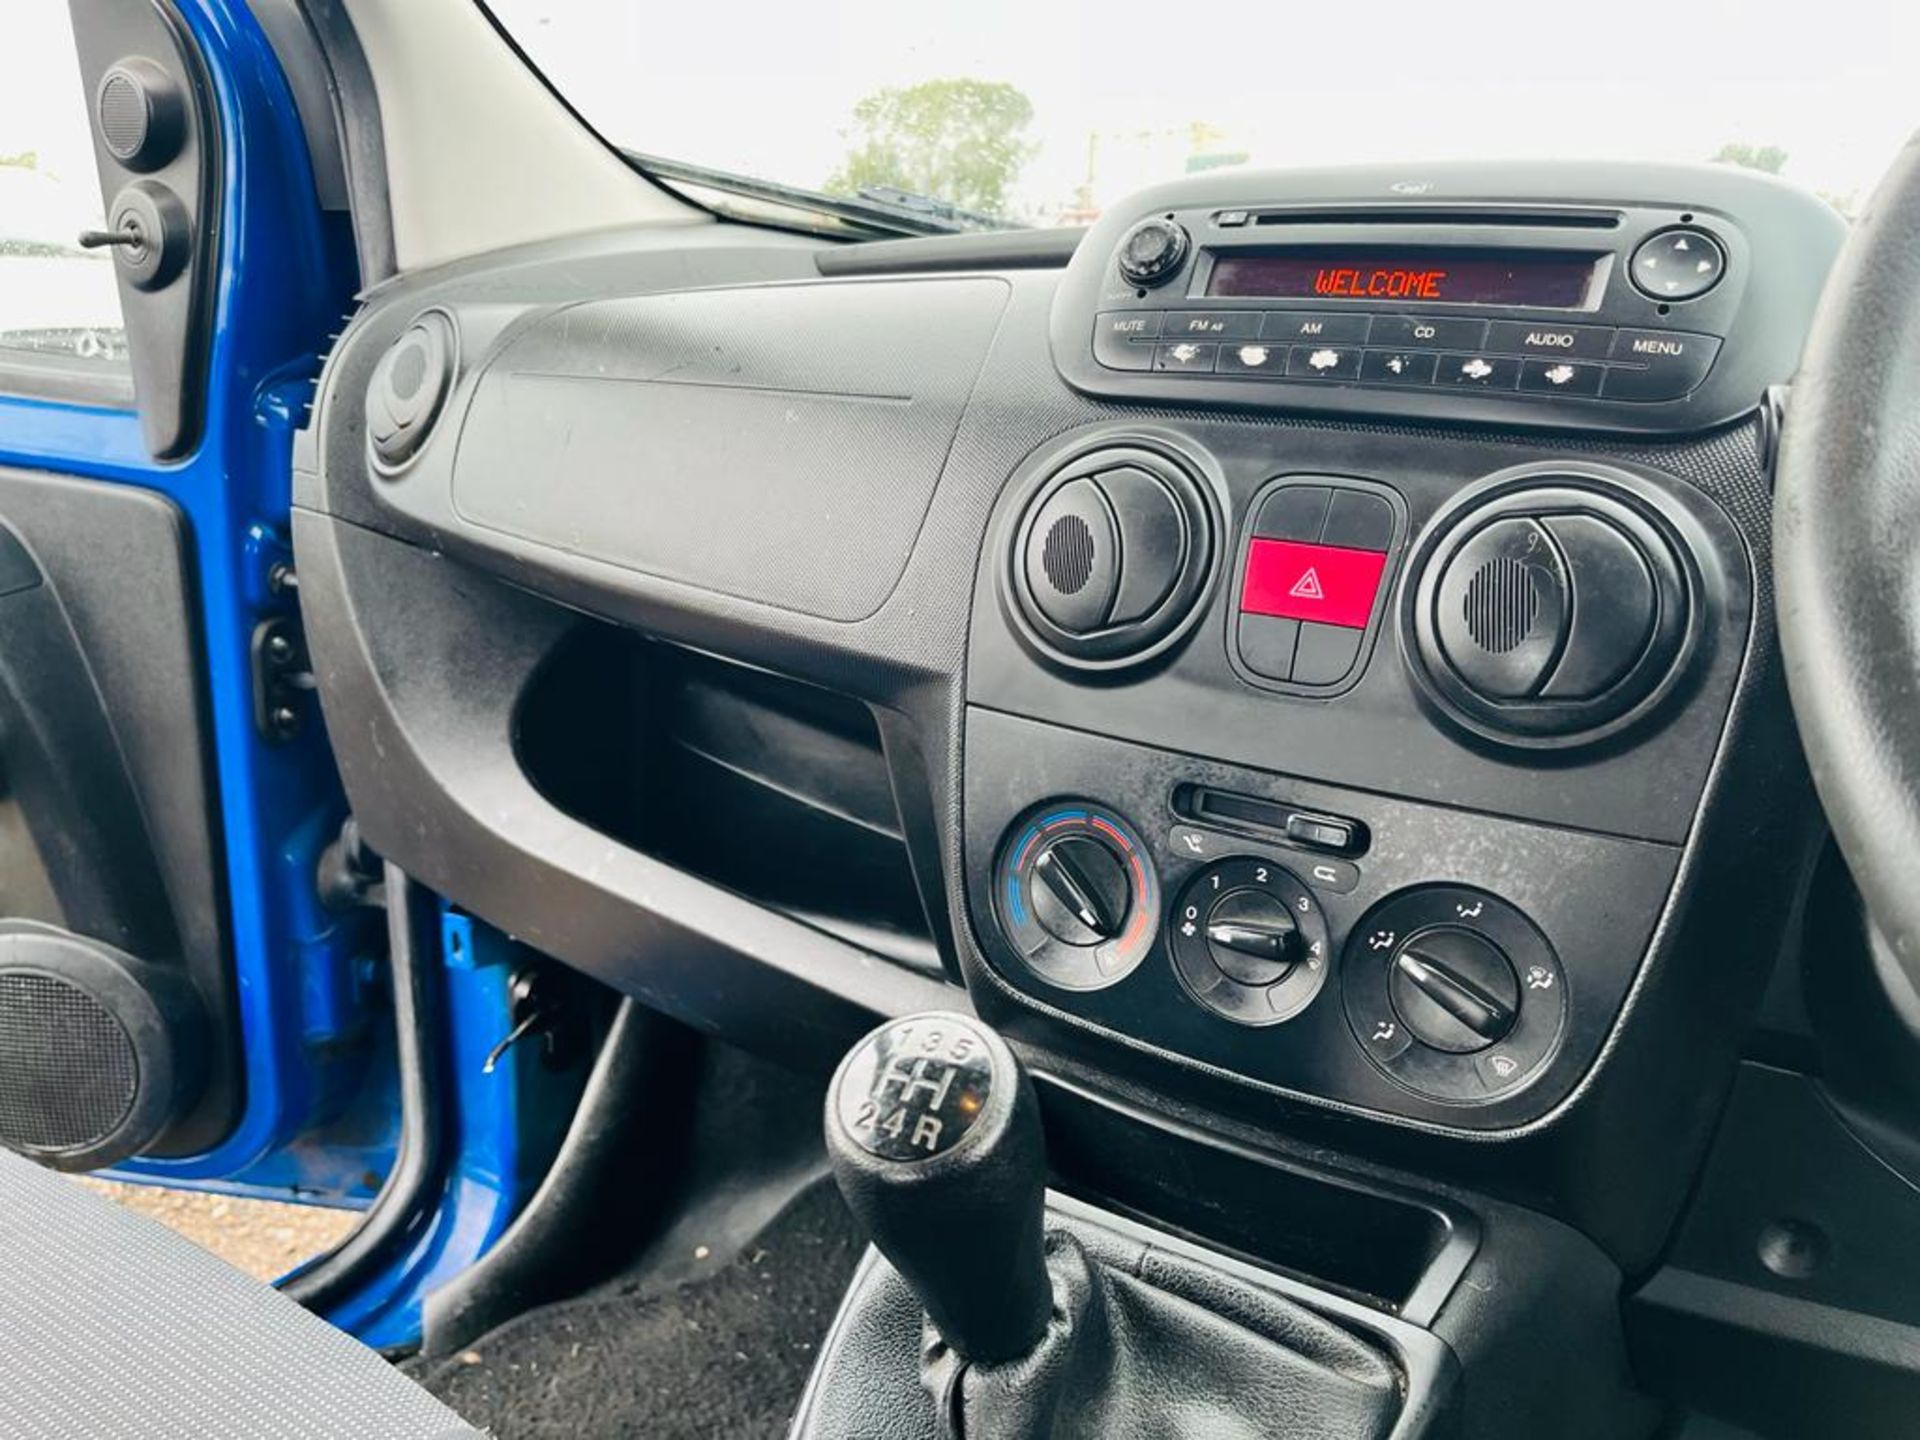 ** ON SALE ** Peugeot Bipper S 1.3 HDI 75 2016 '16 Reg' - Parking Sensors - Panel van - No Vat - Image 20 of 27